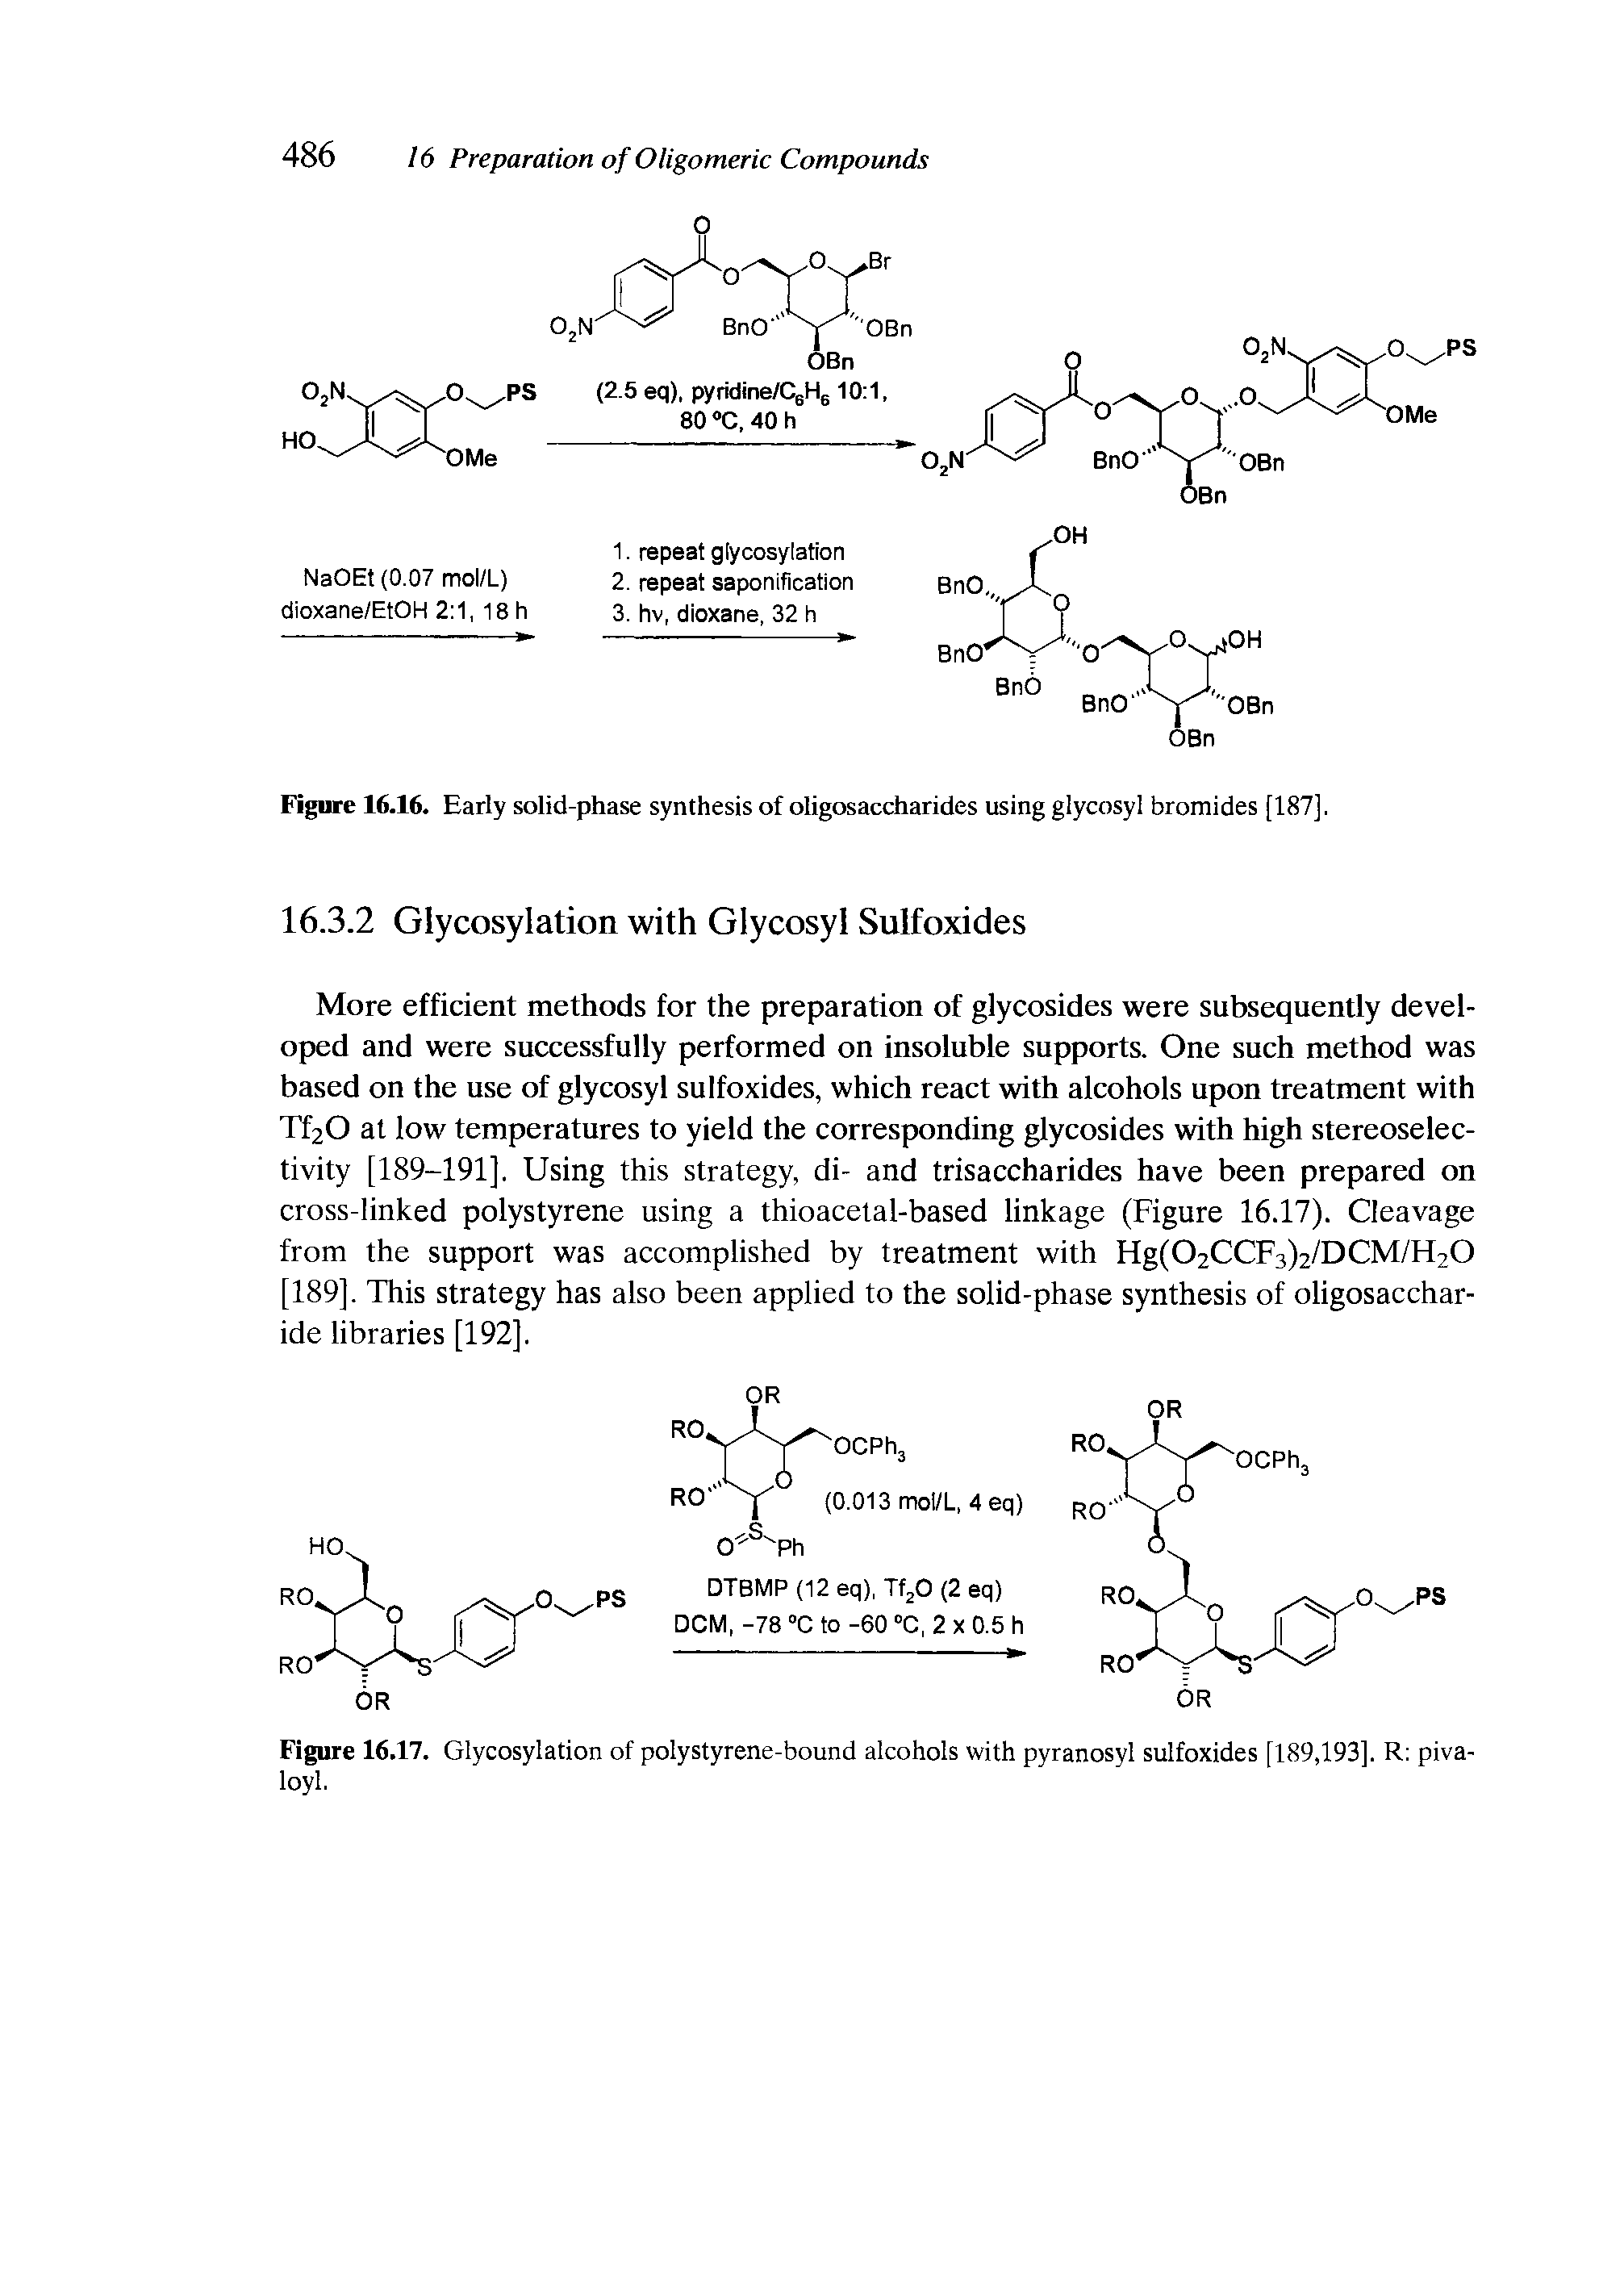 Figure 16.17. Glycosylation of polystyrene-bound alcohols with pyranosyl sulfoxides [189,193]. R piva-loyl.